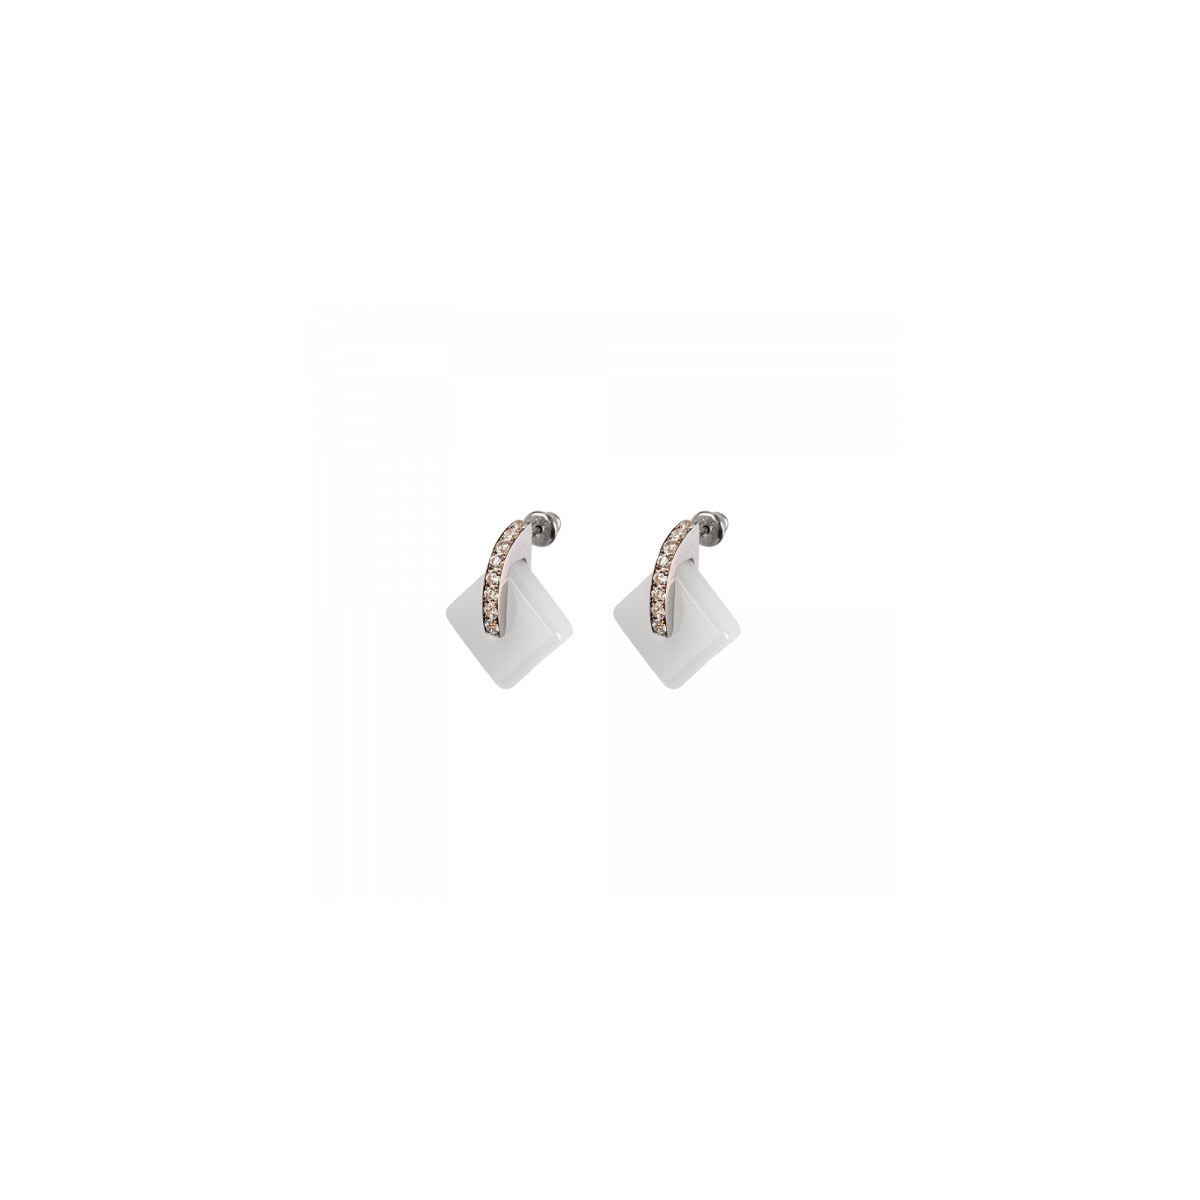 Daum Eclipse Crystal Earrings in White